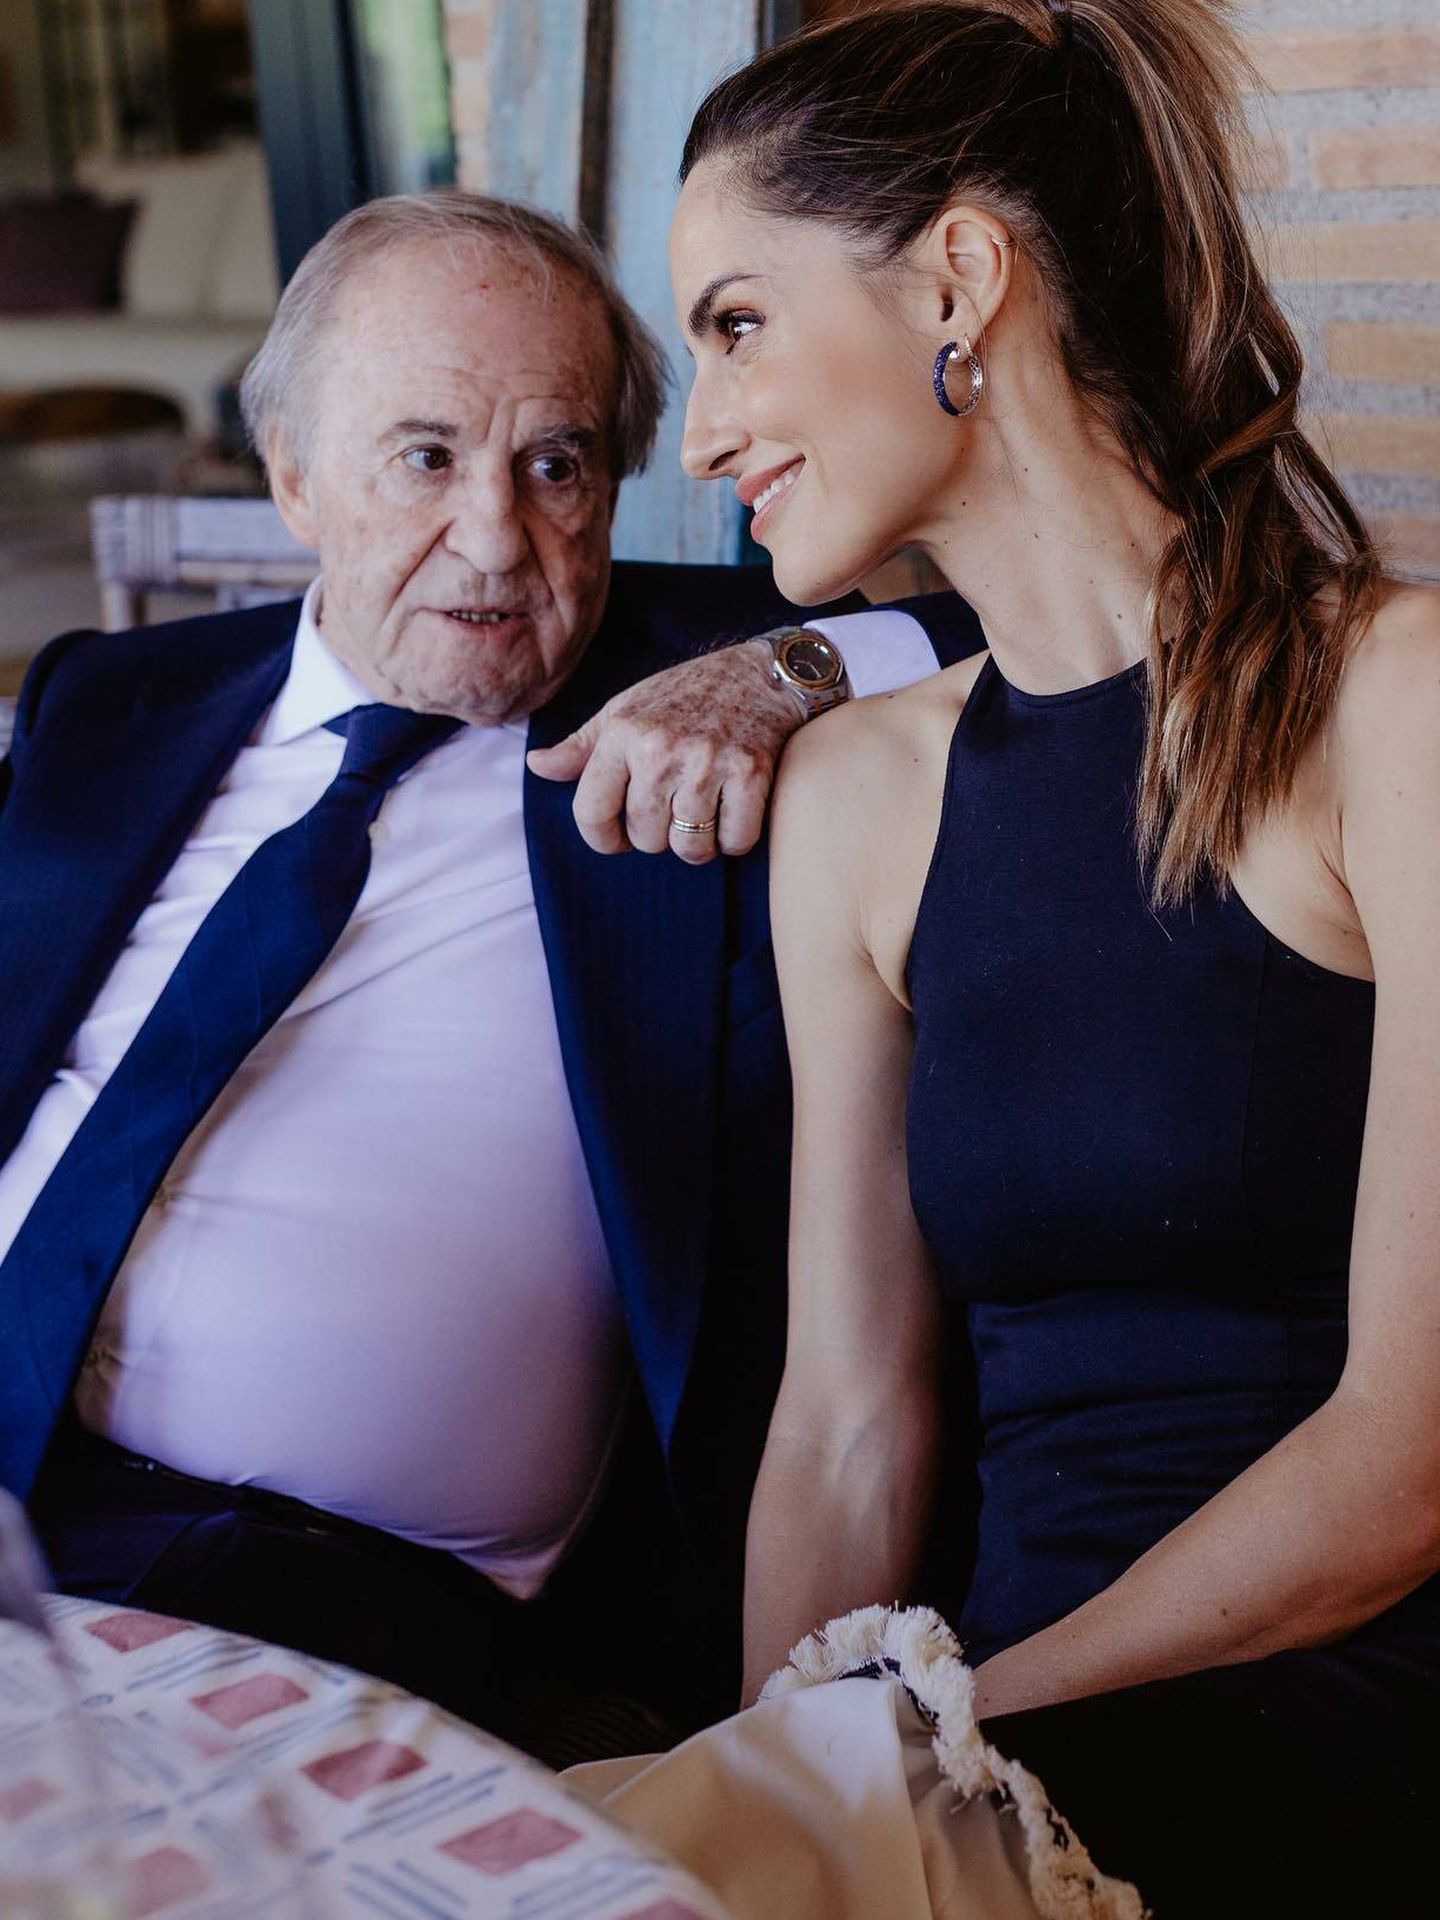 La top model canaria escucha atenta a su suegro. (Instagram/@ariadneartiles)